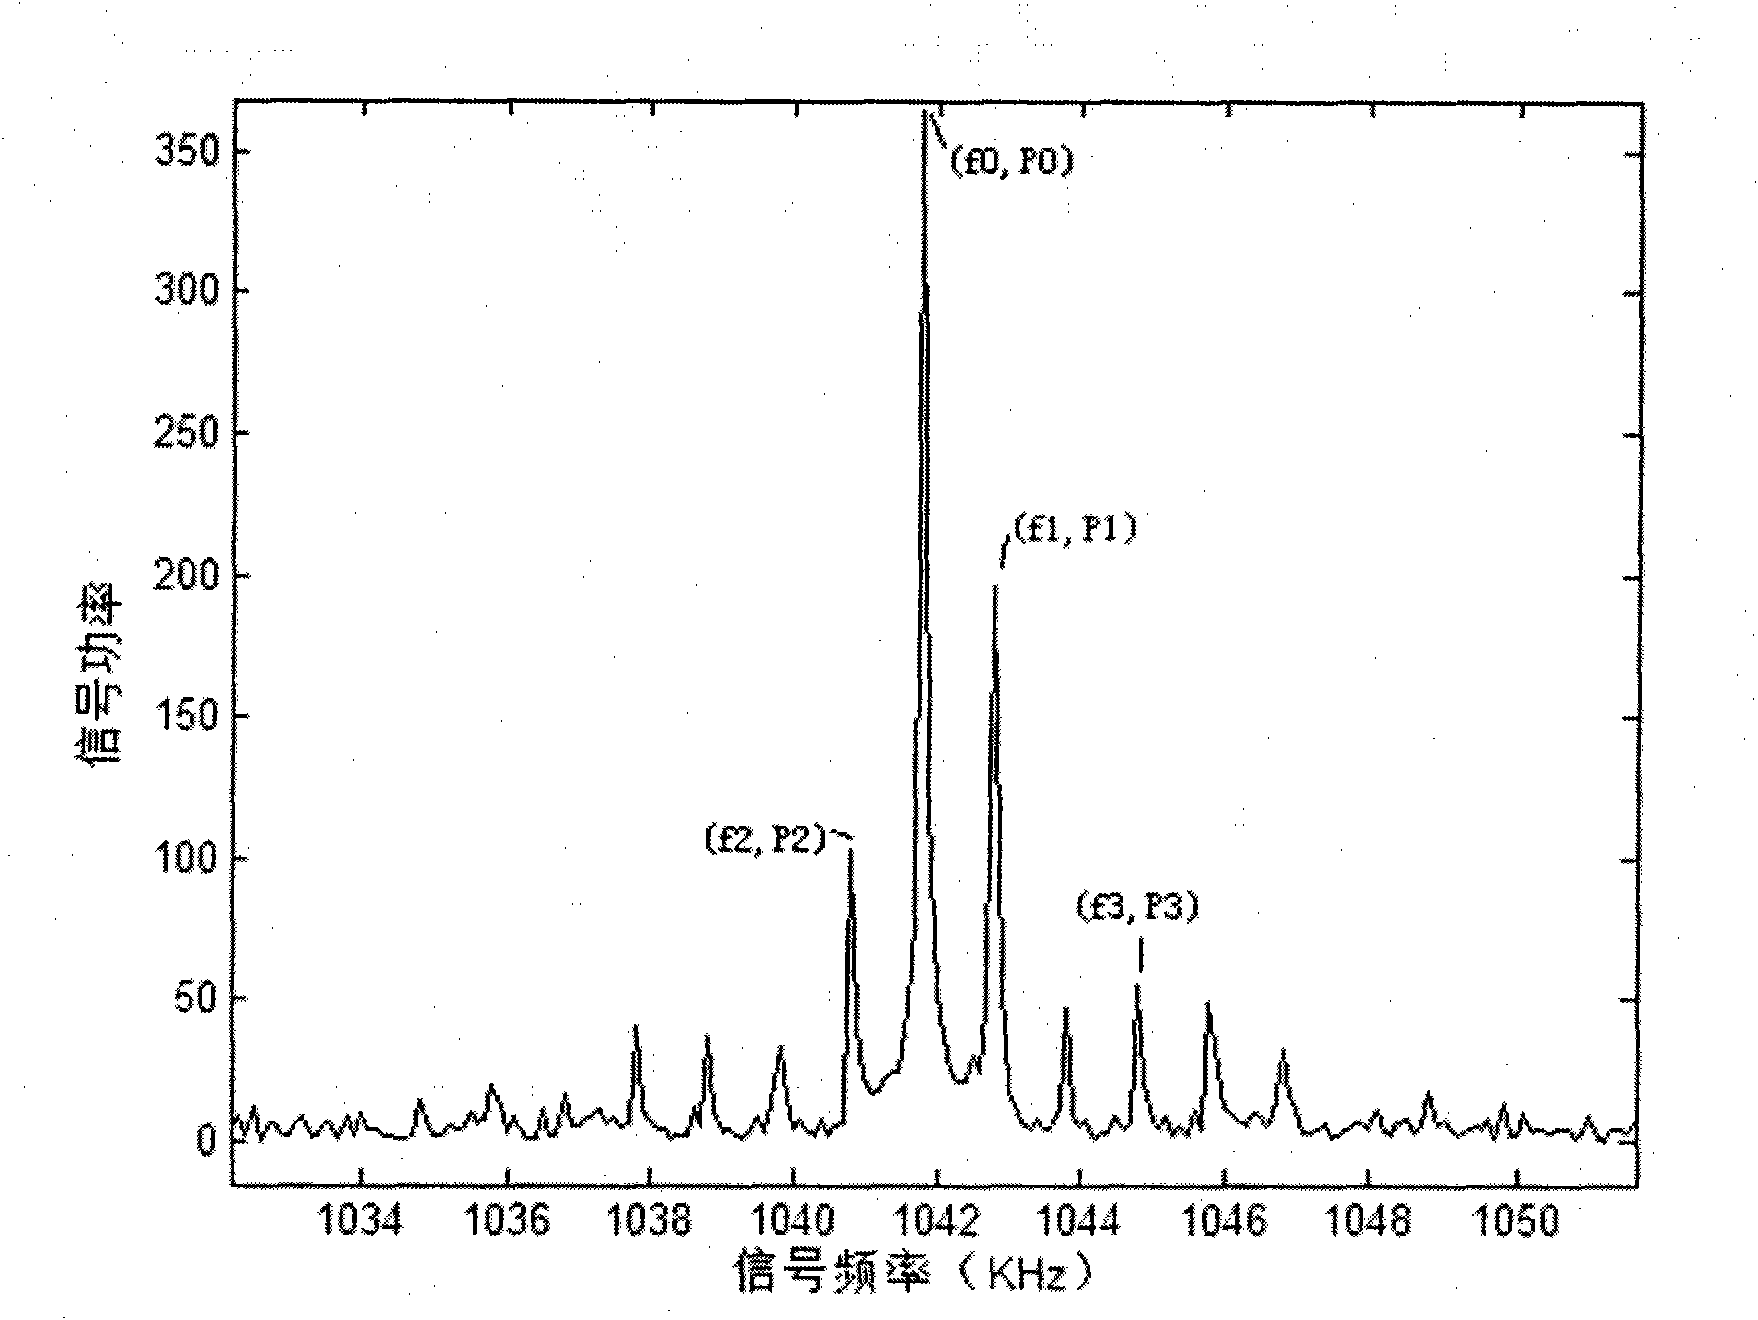 Multicycle modulation method applied to laser ranging device using chirp amplitude modulation based on heterodyne detection